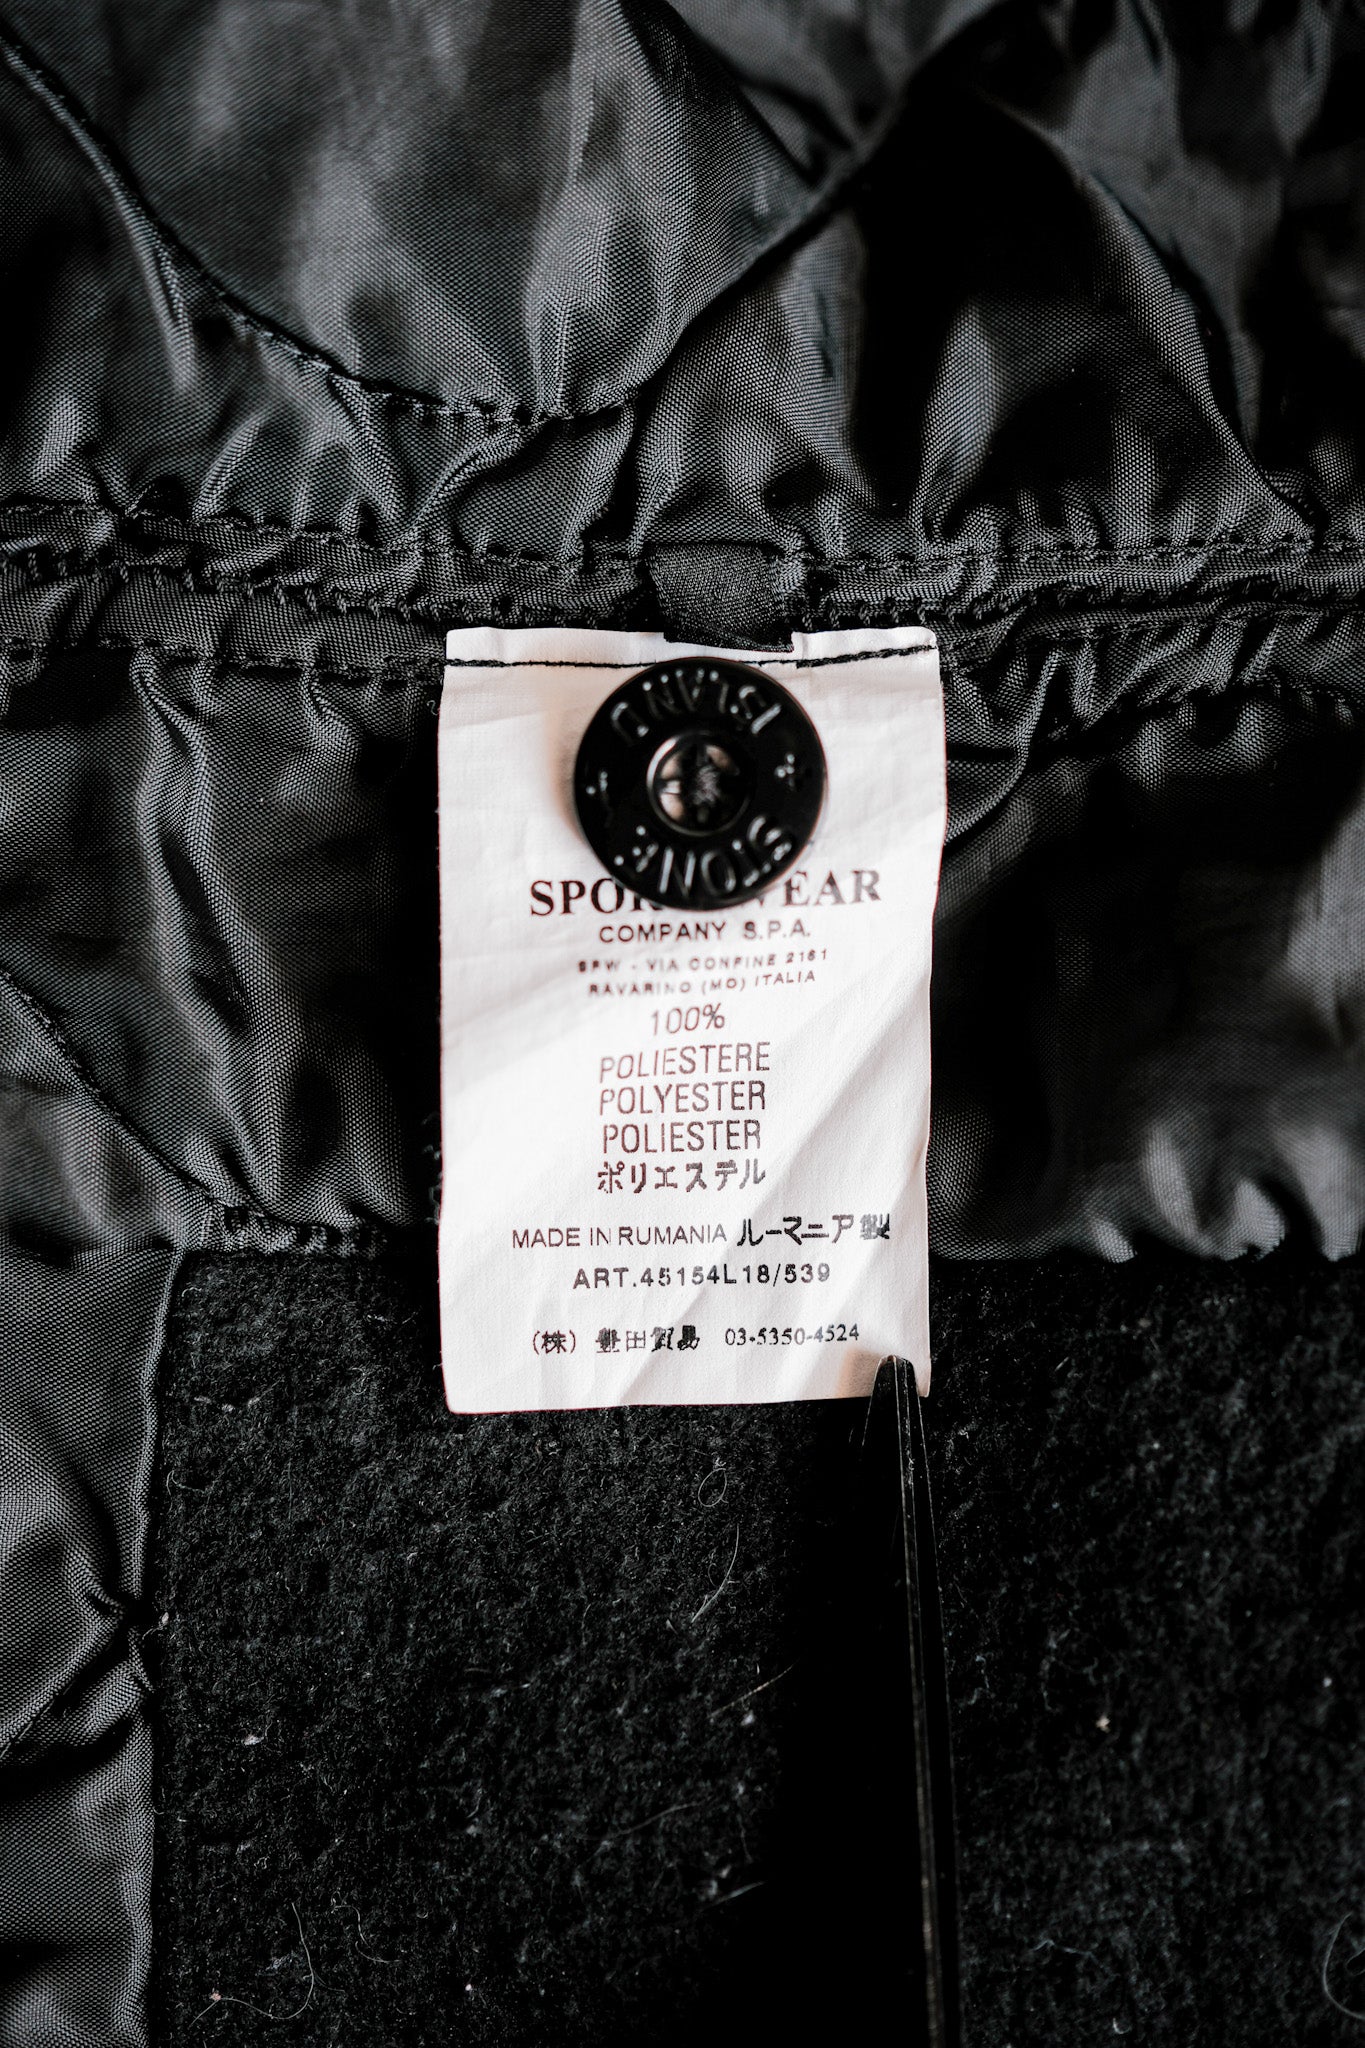 [06AW] Old Stone Island Garment ย้อม Lino Flax Dutch Rope Jacket Size.m